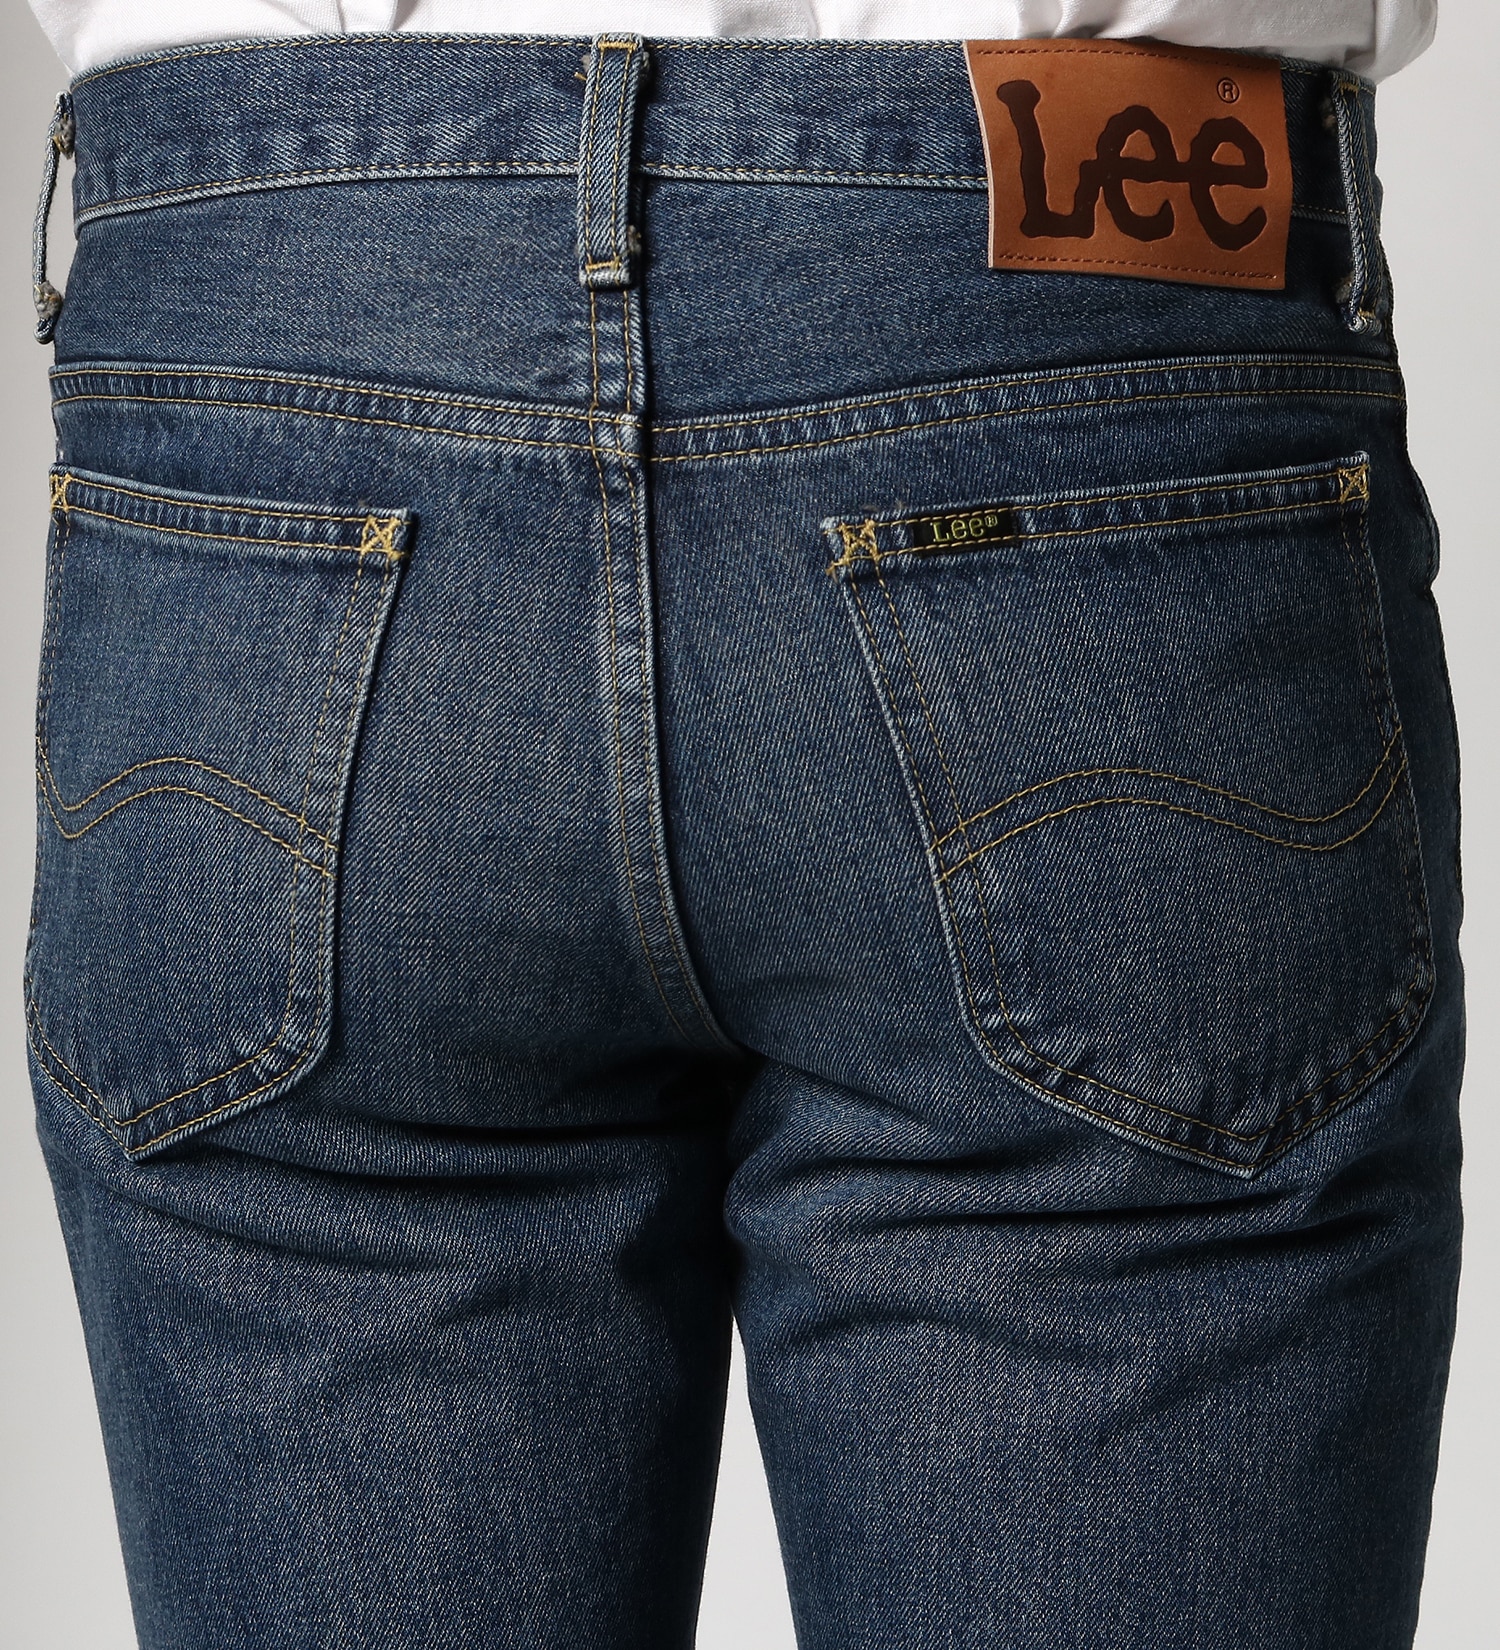 Lee(リー)のAMERICAN STANDARD 102 ブーツカットジーンズ|パンツ/デニムパンツ/メンズ|中色ブルー